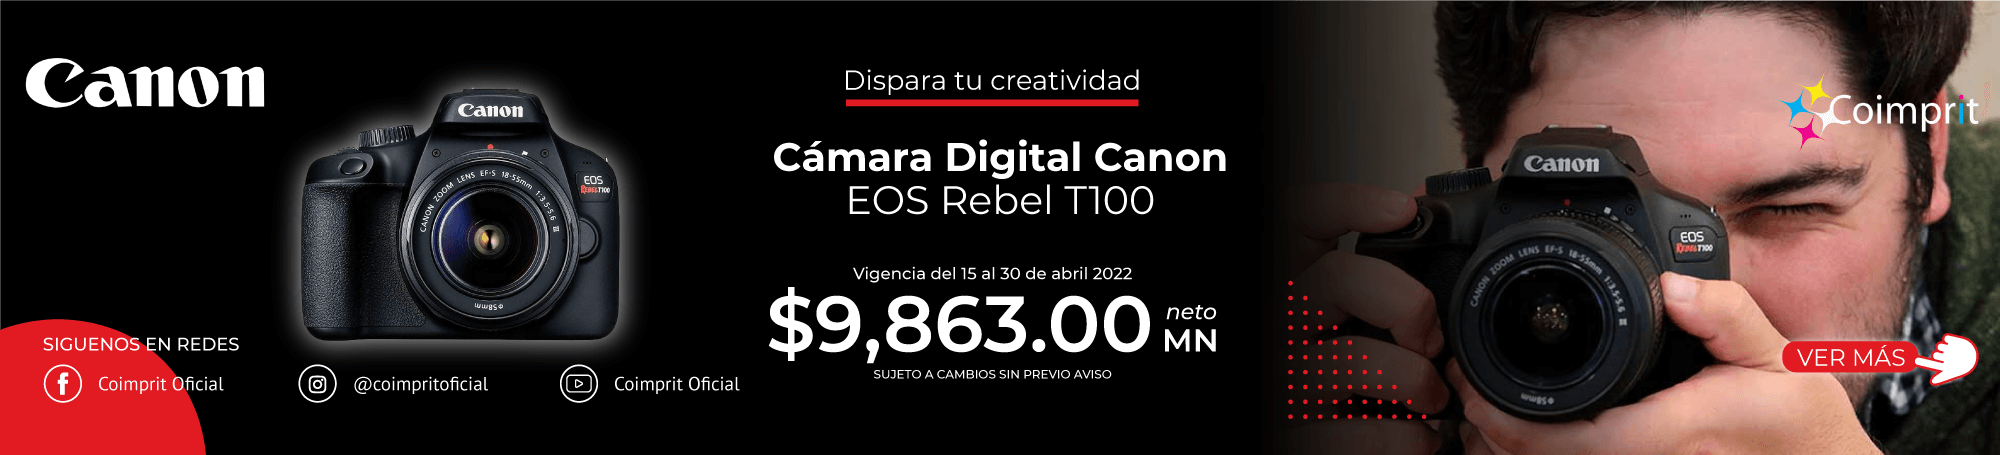 Cámara-Digital-Canon-EOS-Rebel-T100